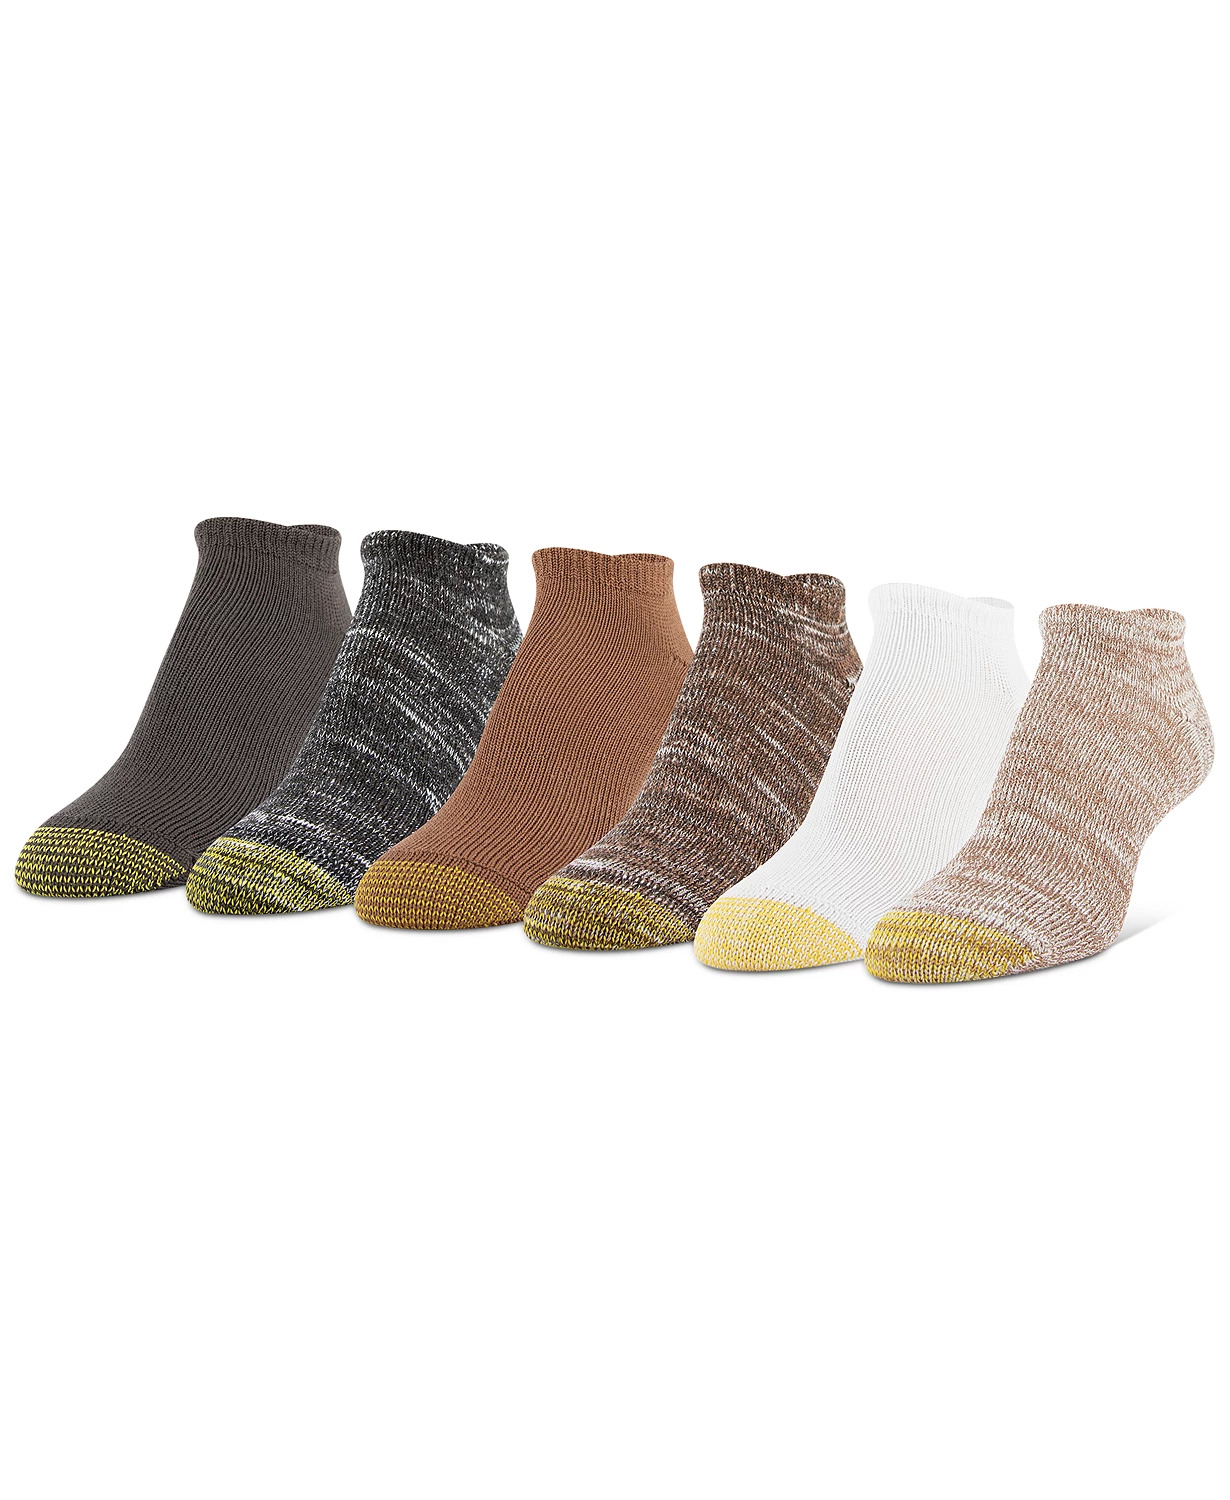 6-Pack Gold Toe Women's Ultra Soft Melange Liner Socks (Various Colors, Size 9-11) $6.73 + SD Cashback + Free Store Pickup at Macy's or FS on $25+